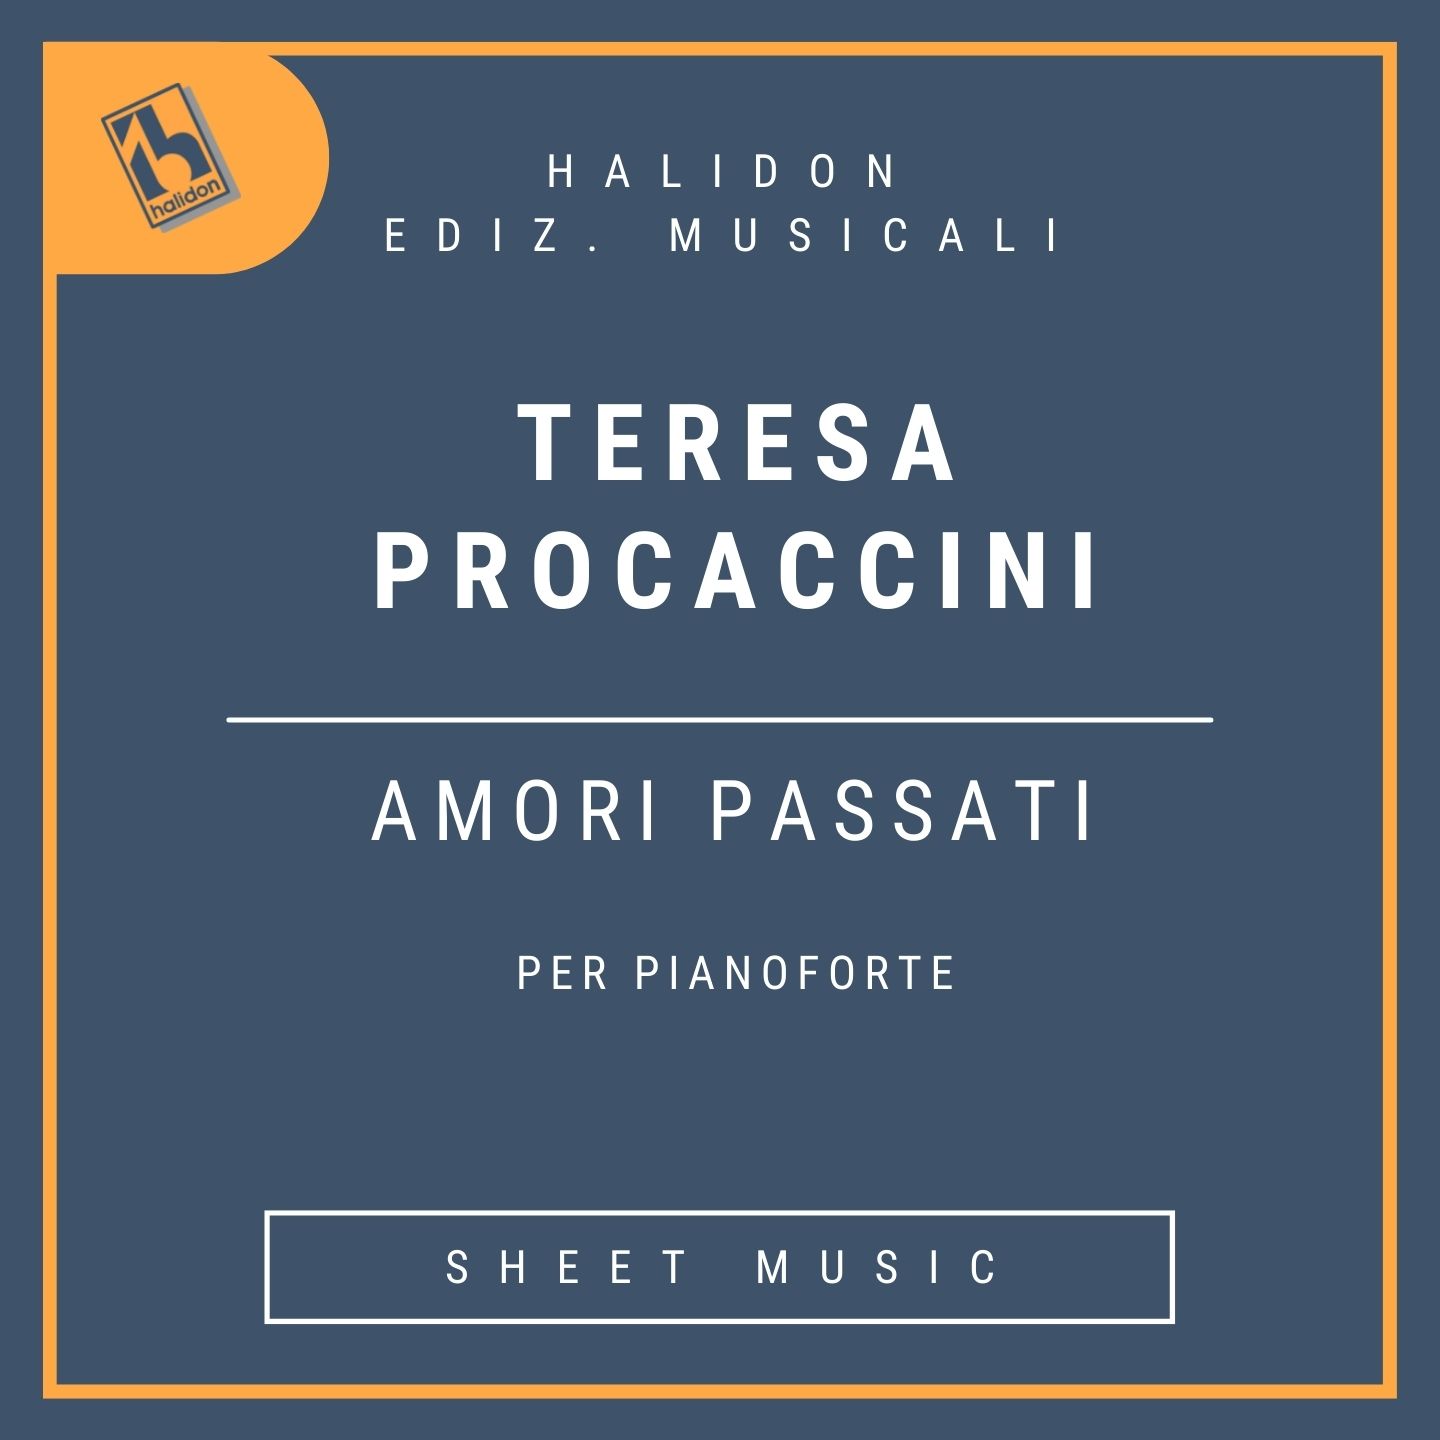 Teresa Procaccini - Amori passati